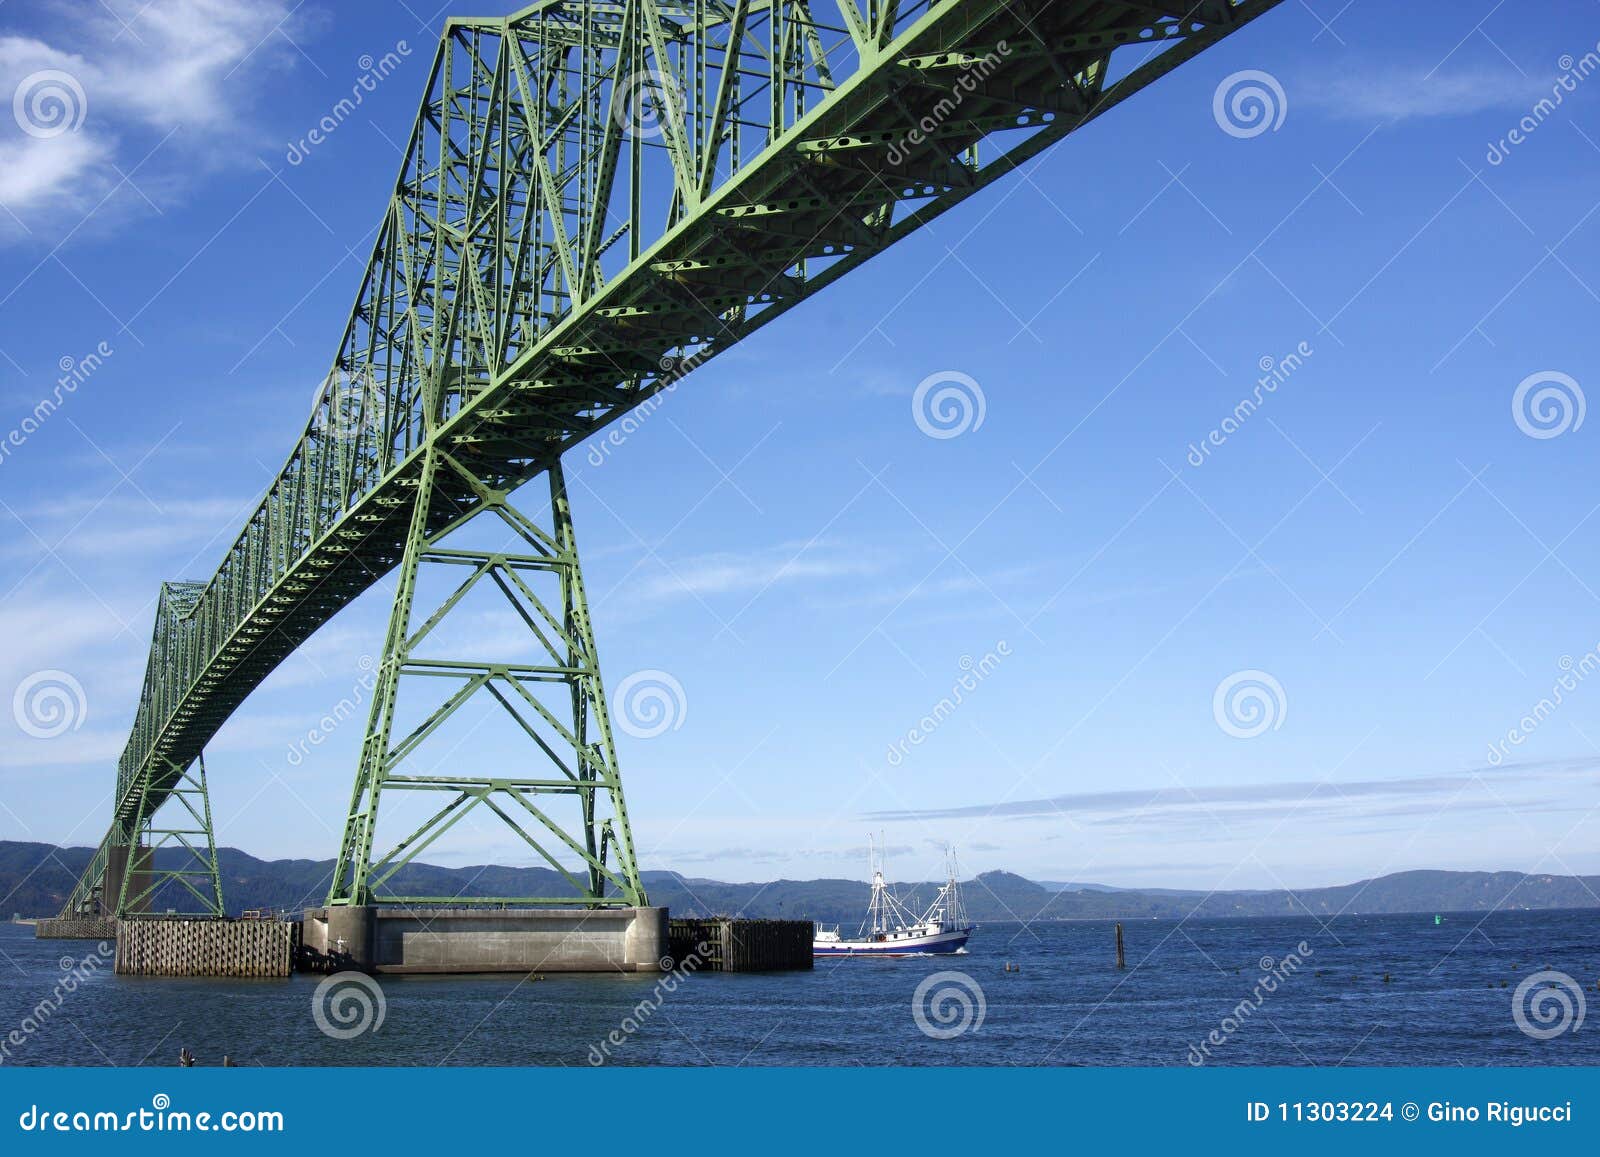 Stock Images: The Astoria Bridge & a passing boat.